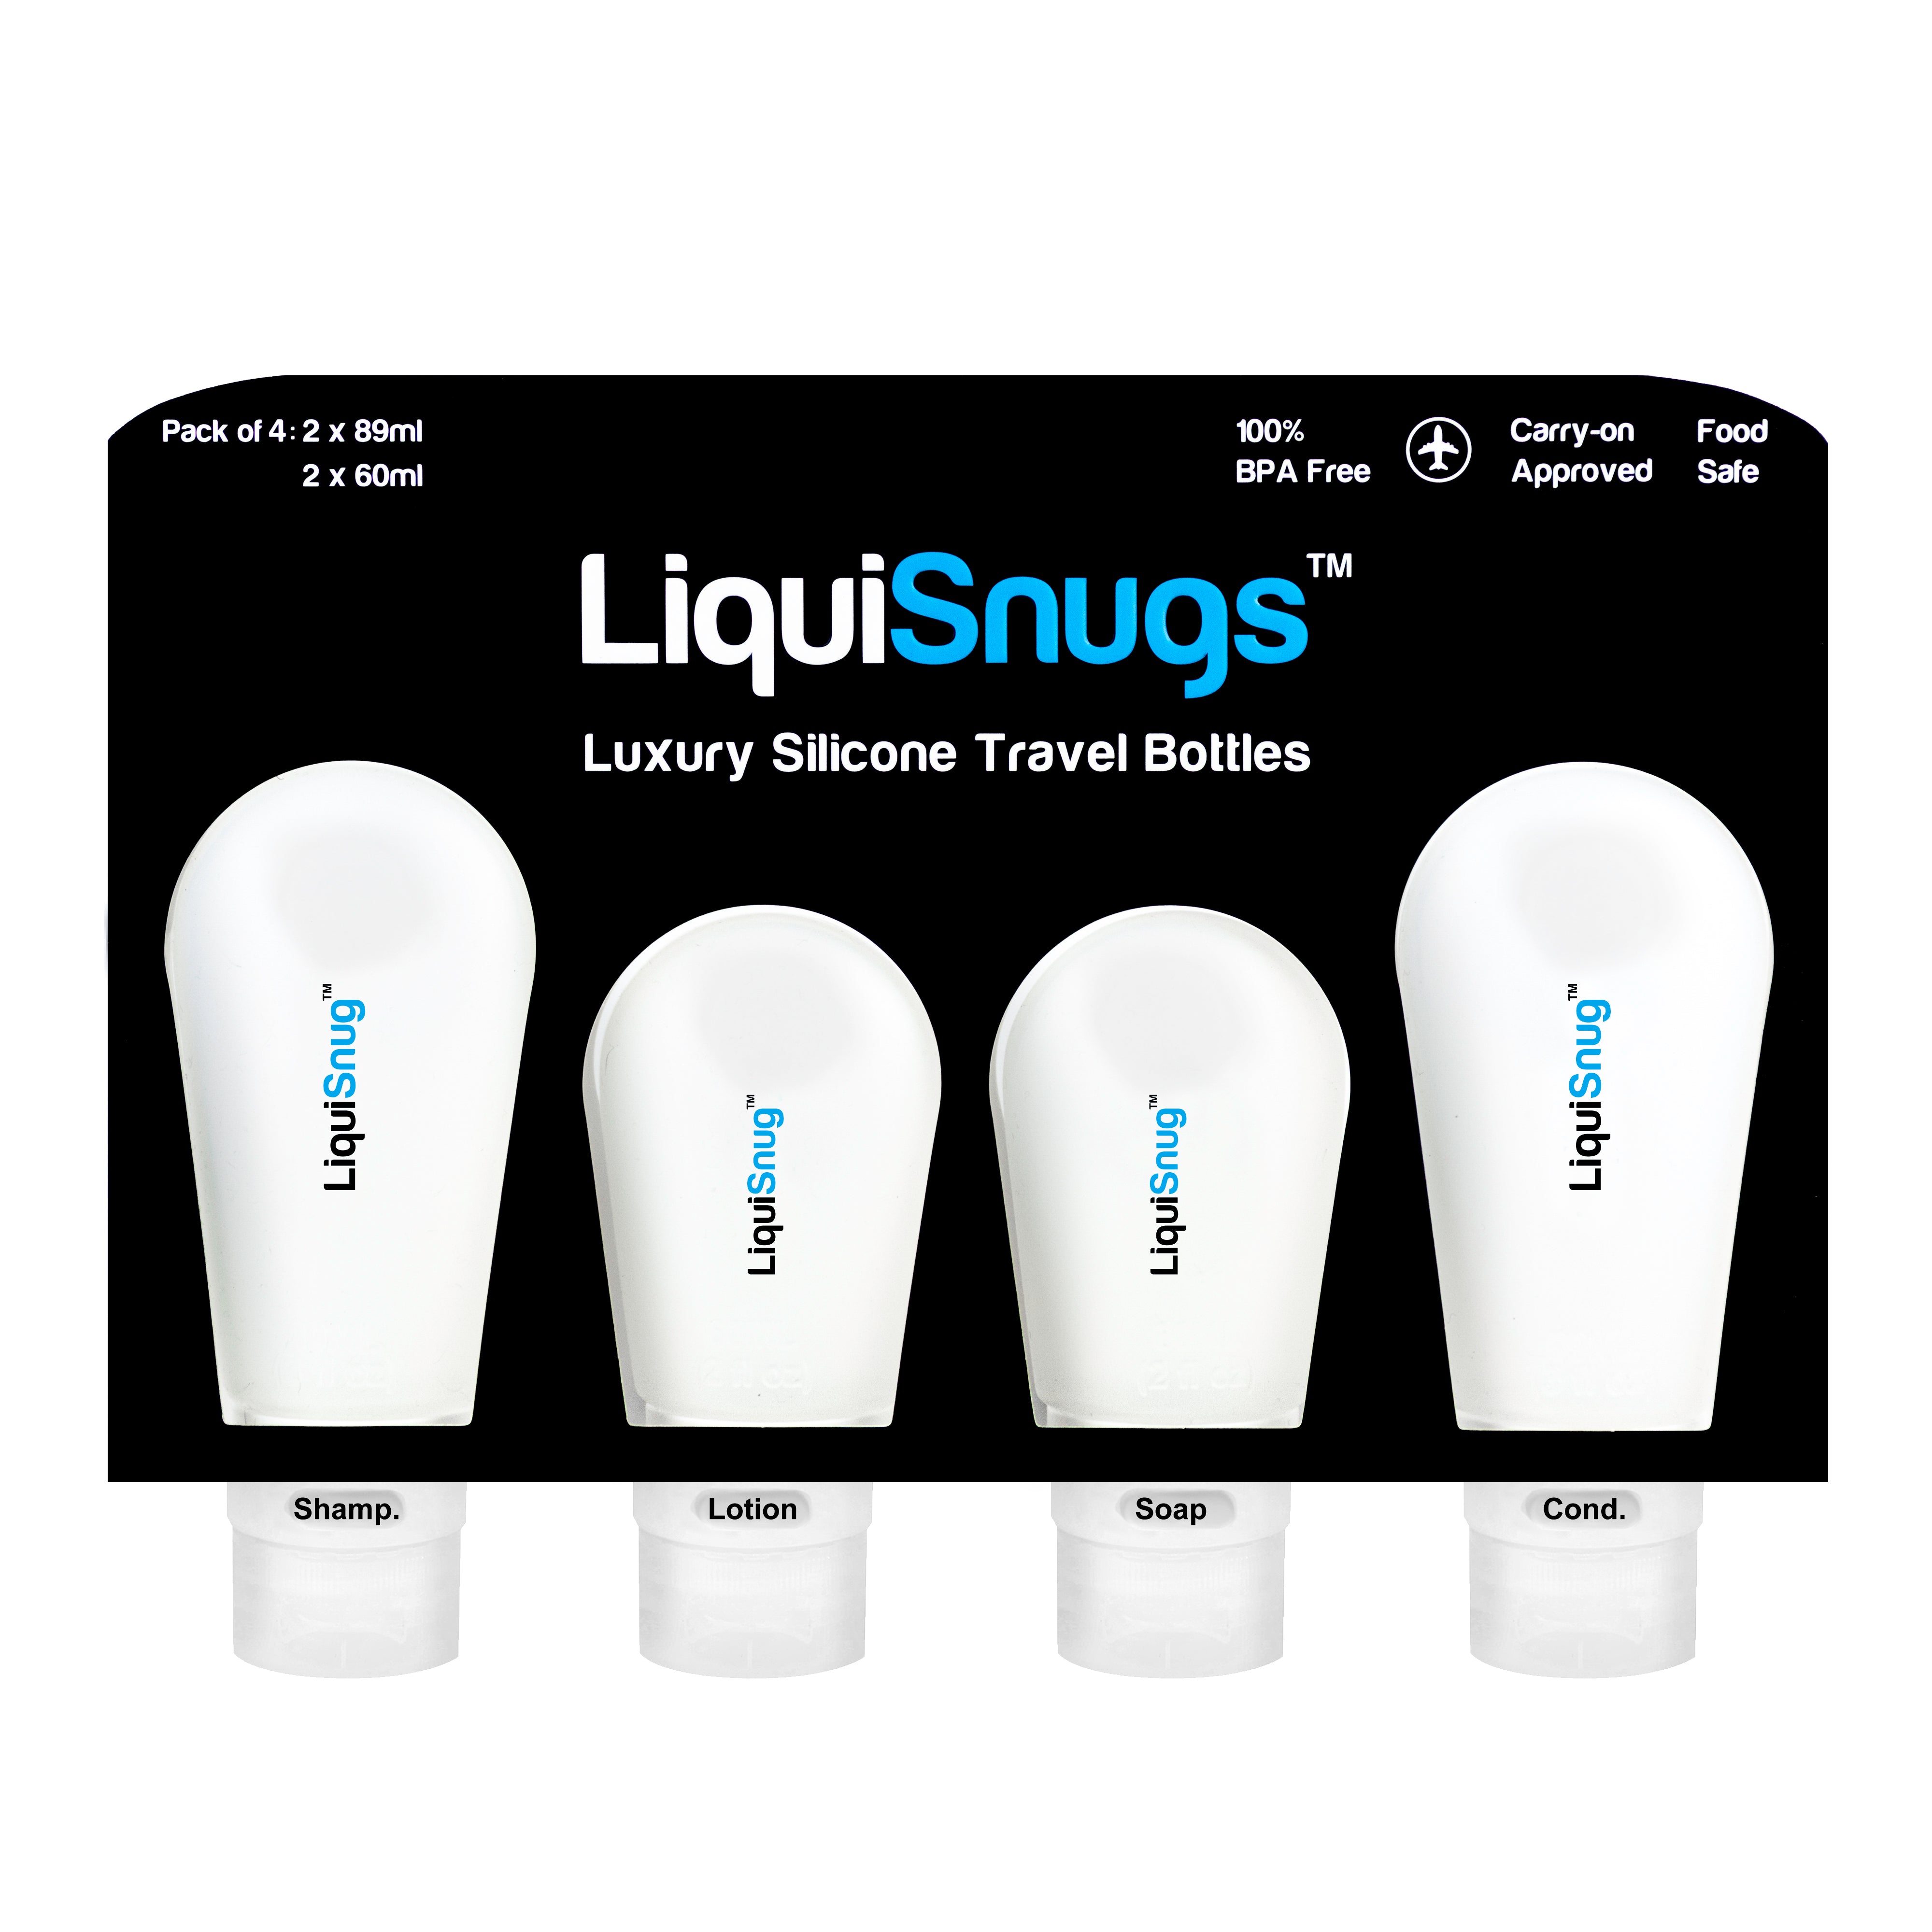 Liquisnugs Luxury Silicone Travel Bottles